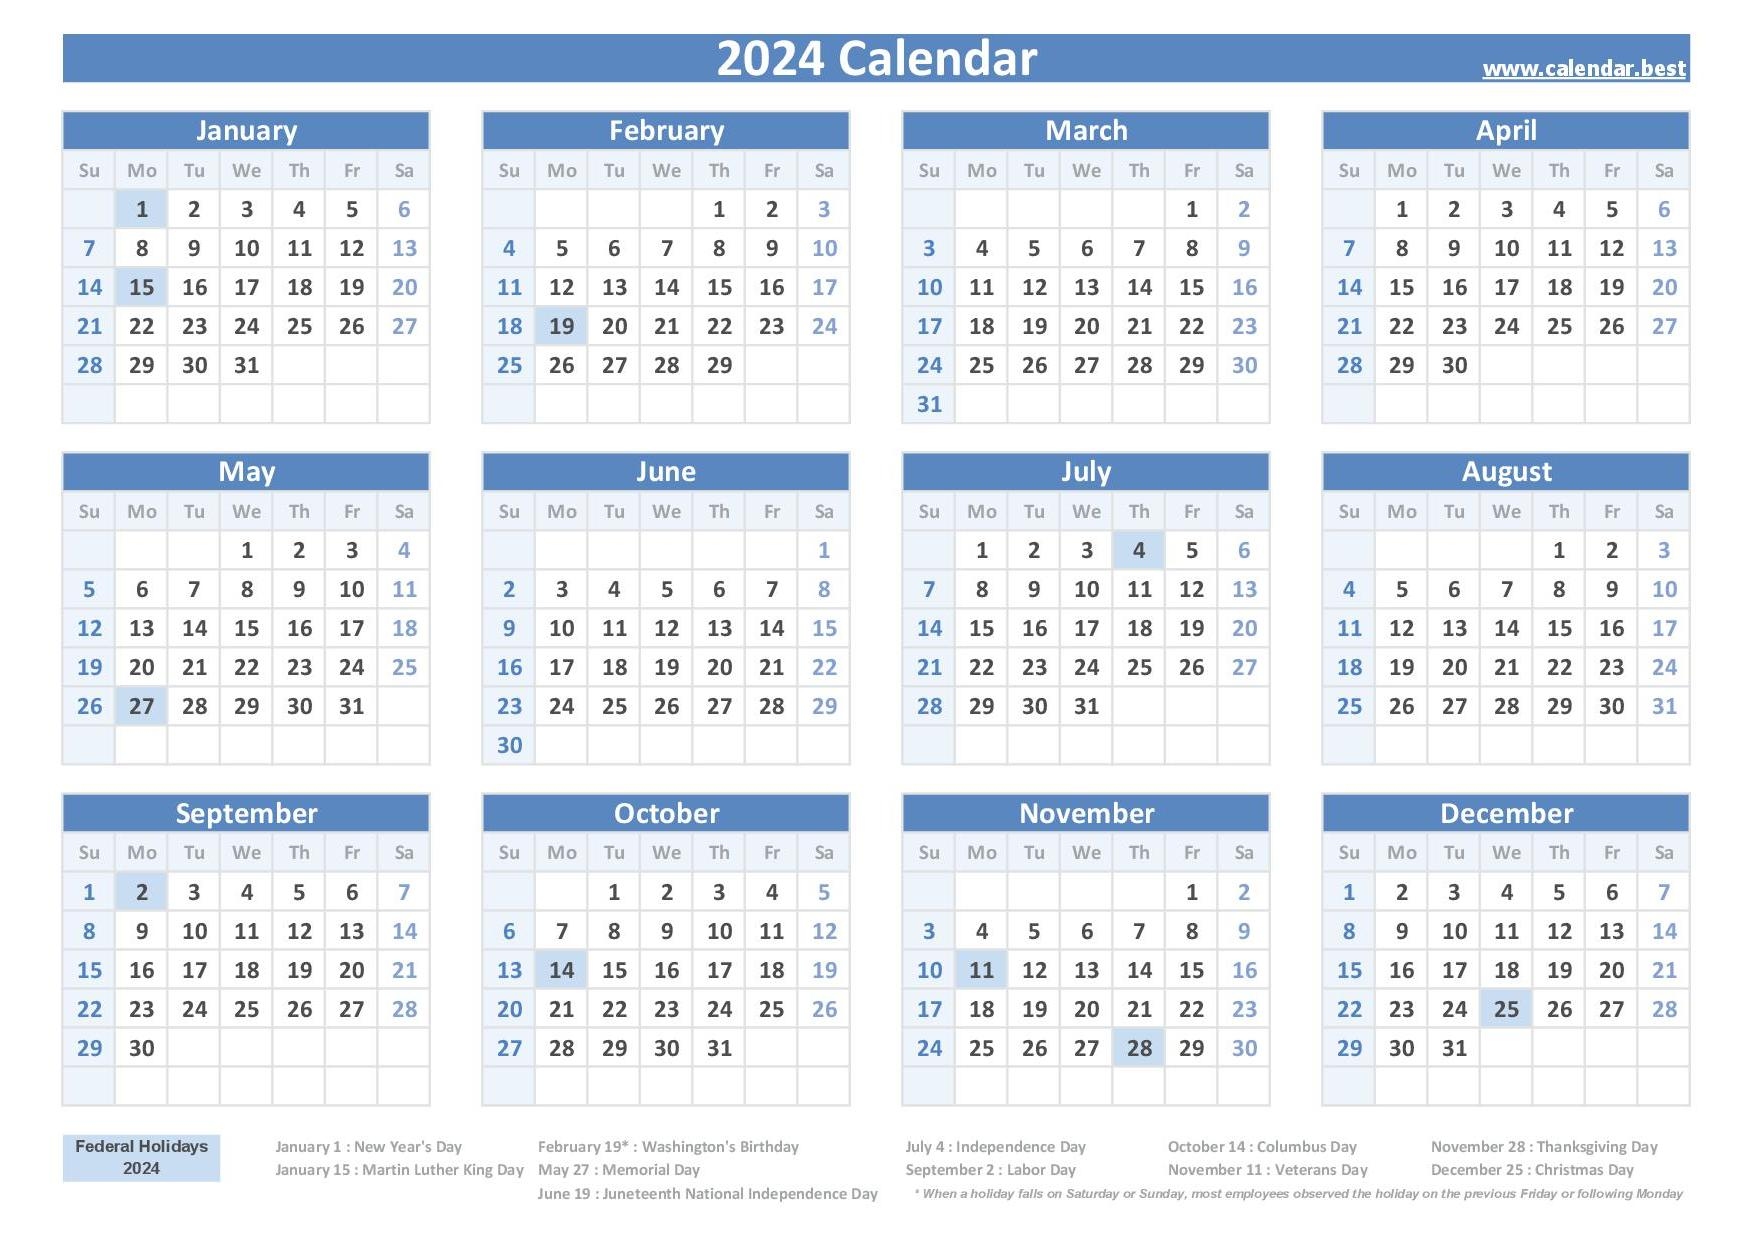 2024 Us Federal Holiday Calendar Printable Bill Marjie - Free Printable 2024 Calendar With Us Holidays Foe Crafts